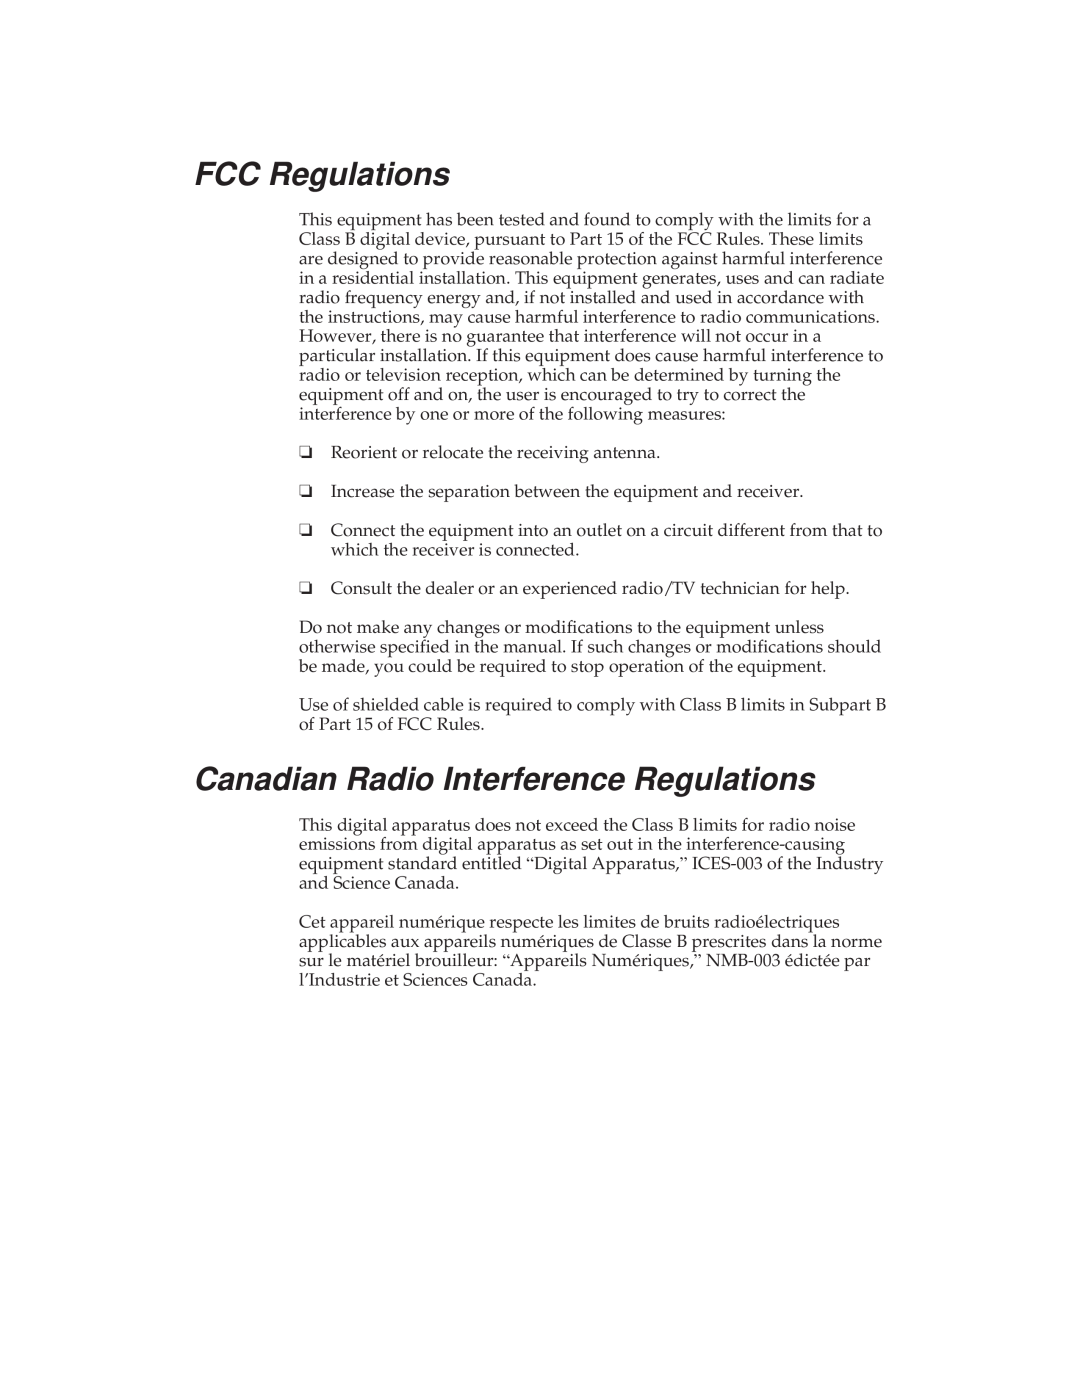 Canon BJ-30 manual FCC Regulations, Canadian Radio Interference Regulations 